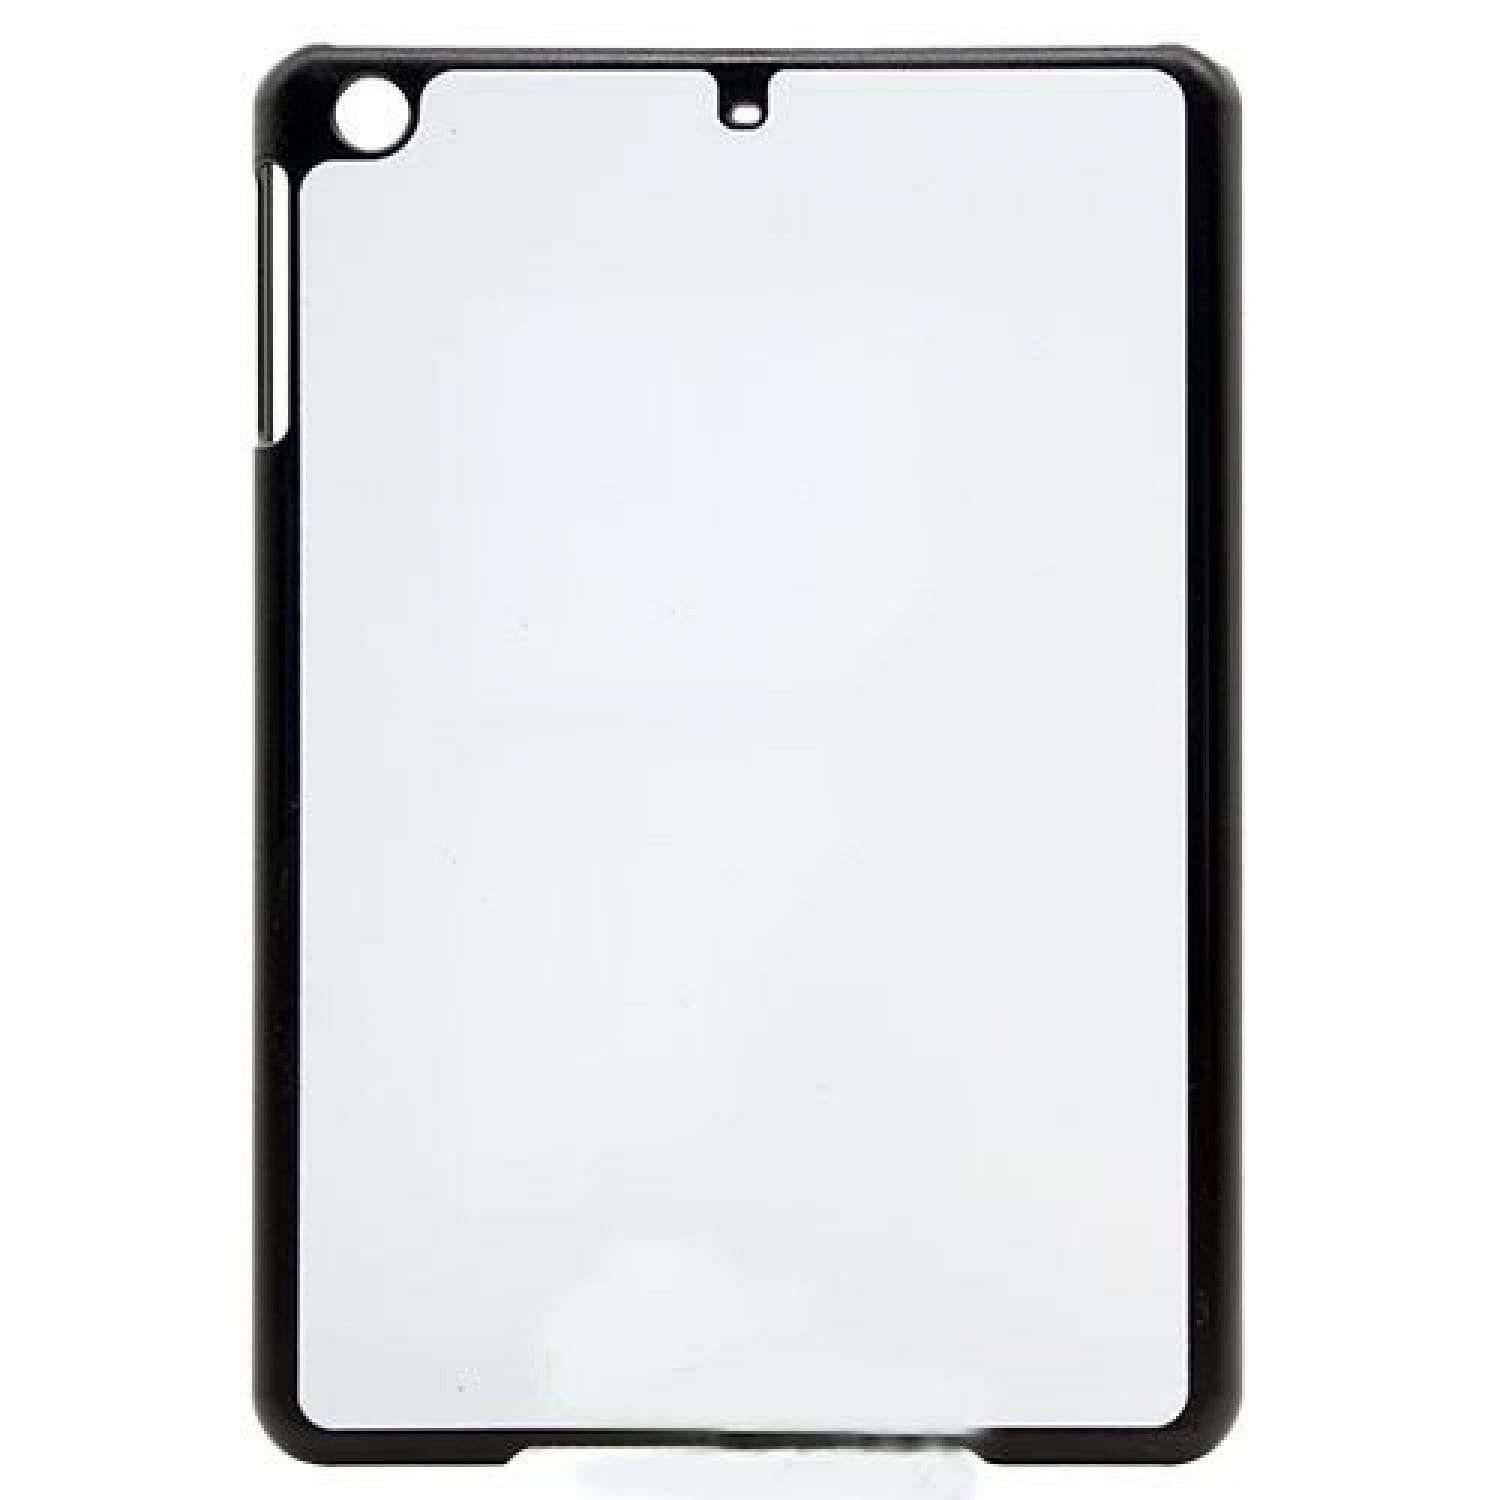 Coque tablette tactile 2D iPad Air rigide blanche avec feuille aluminium